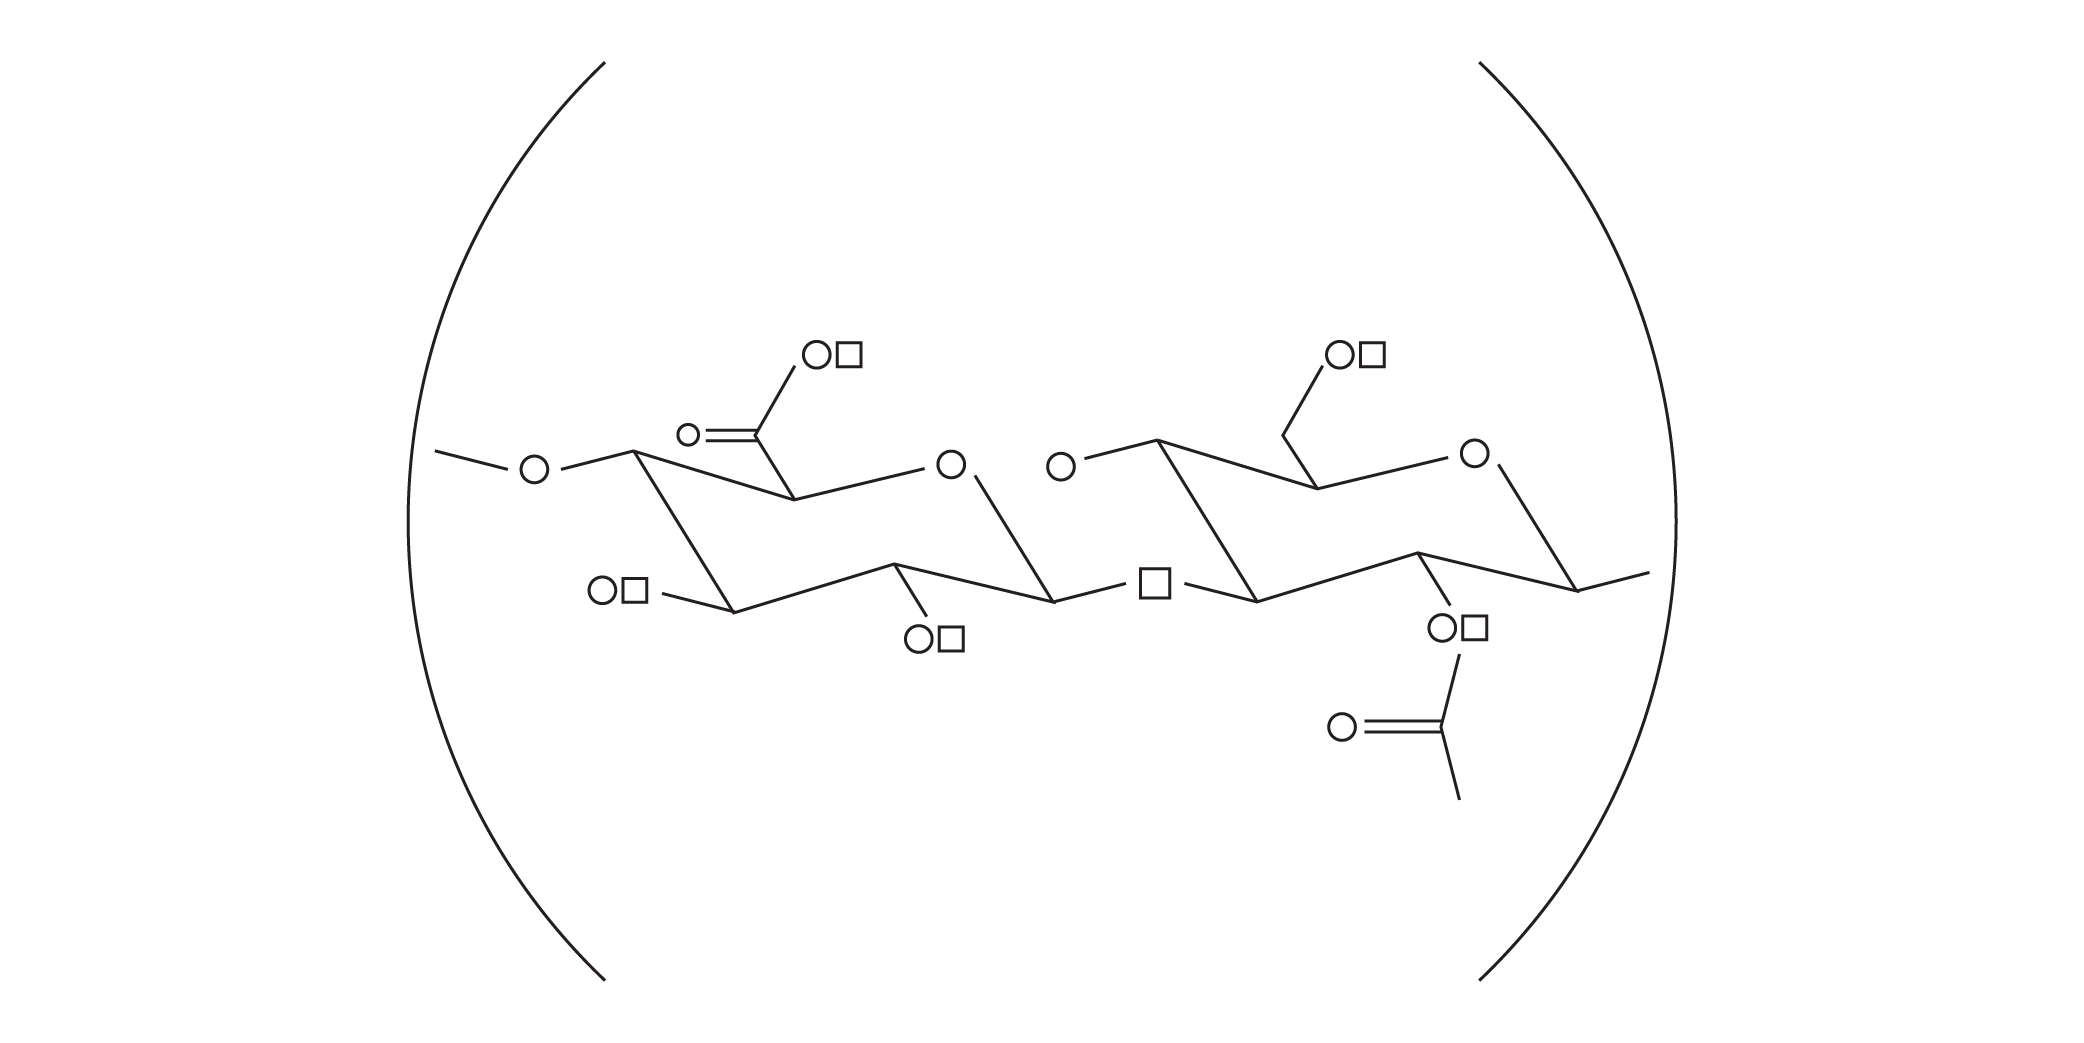 Sodium Hyaluronate Crosspolymer